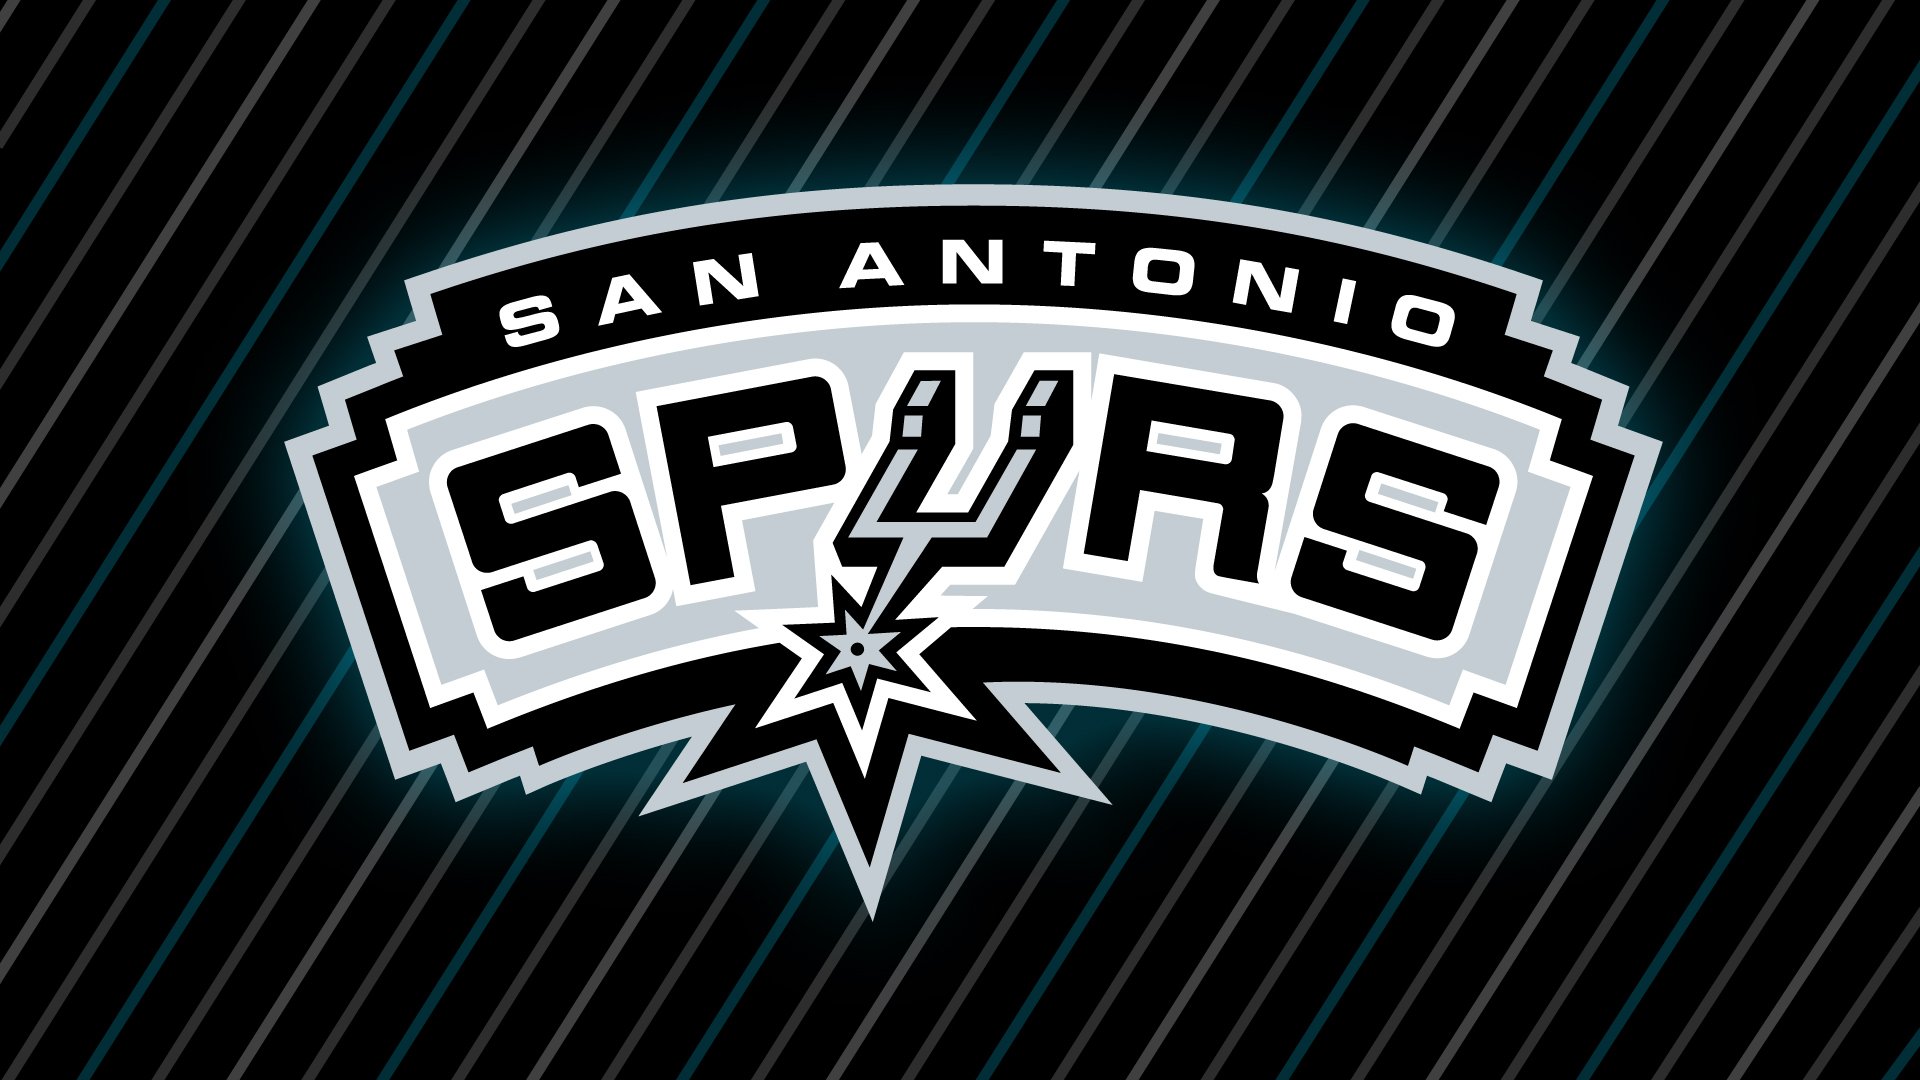 San Antonio Spurs wallpaper download